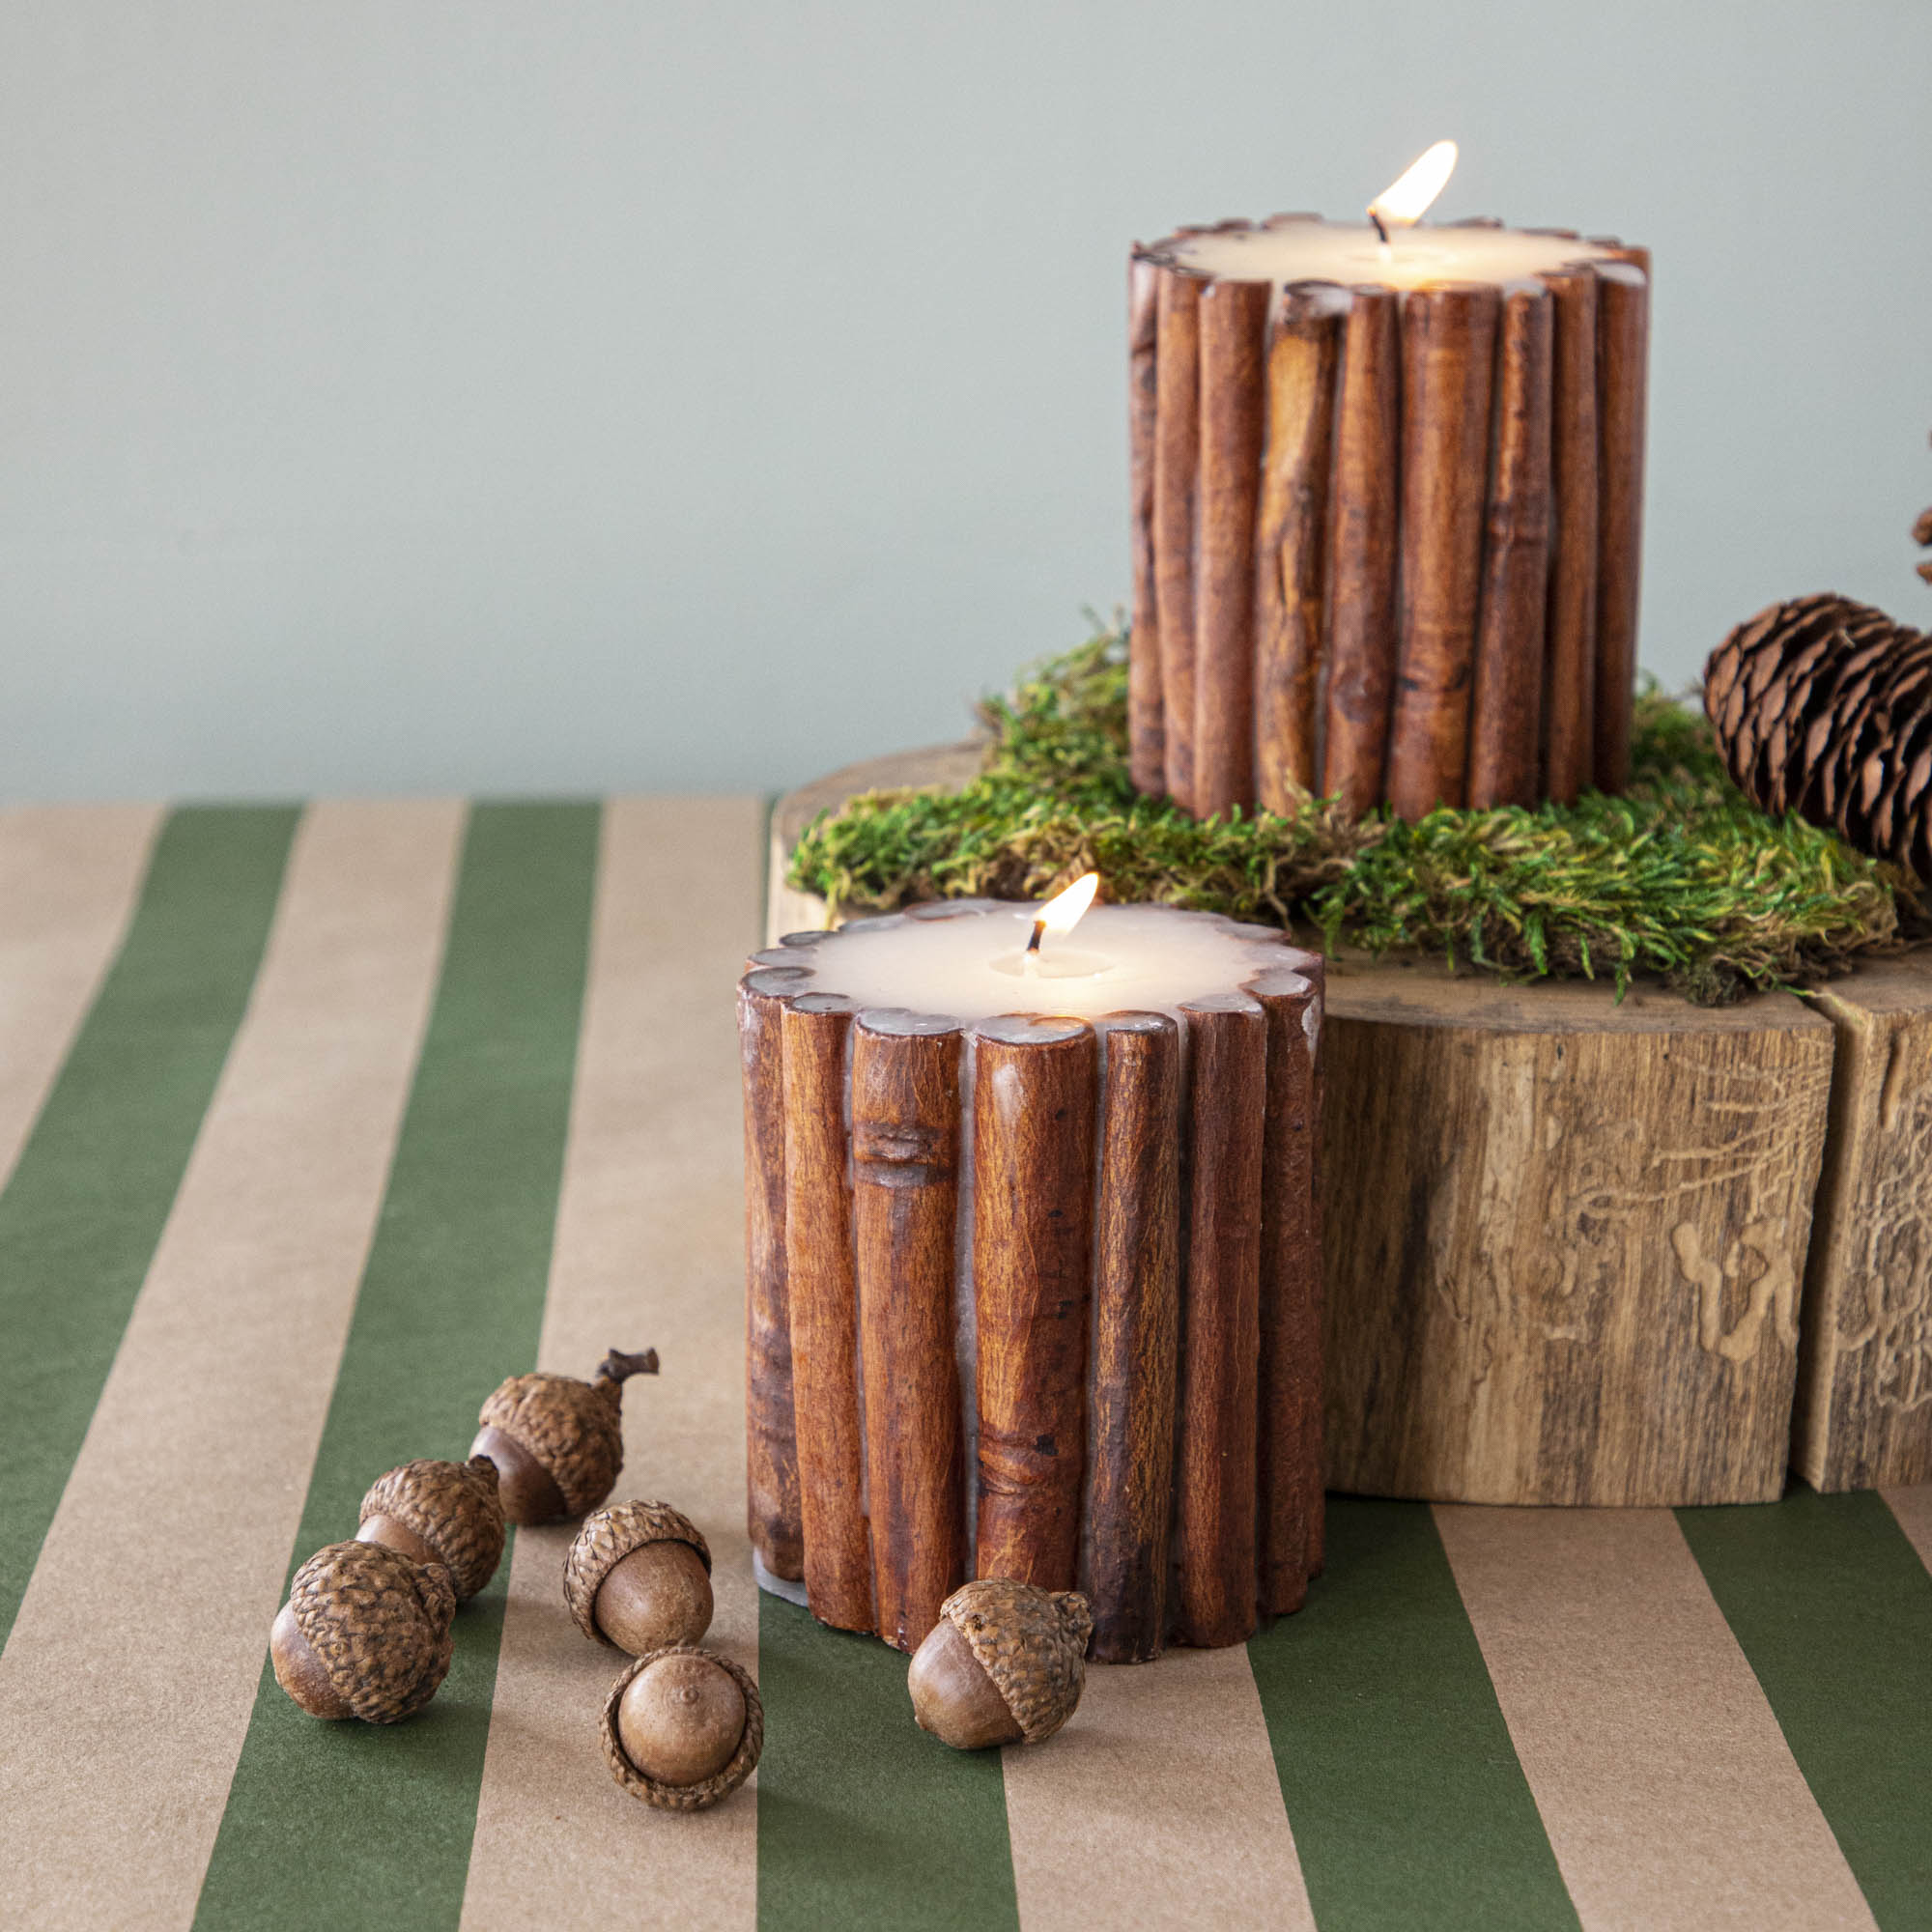 Cinnamon Stick Scented Pillar Candles